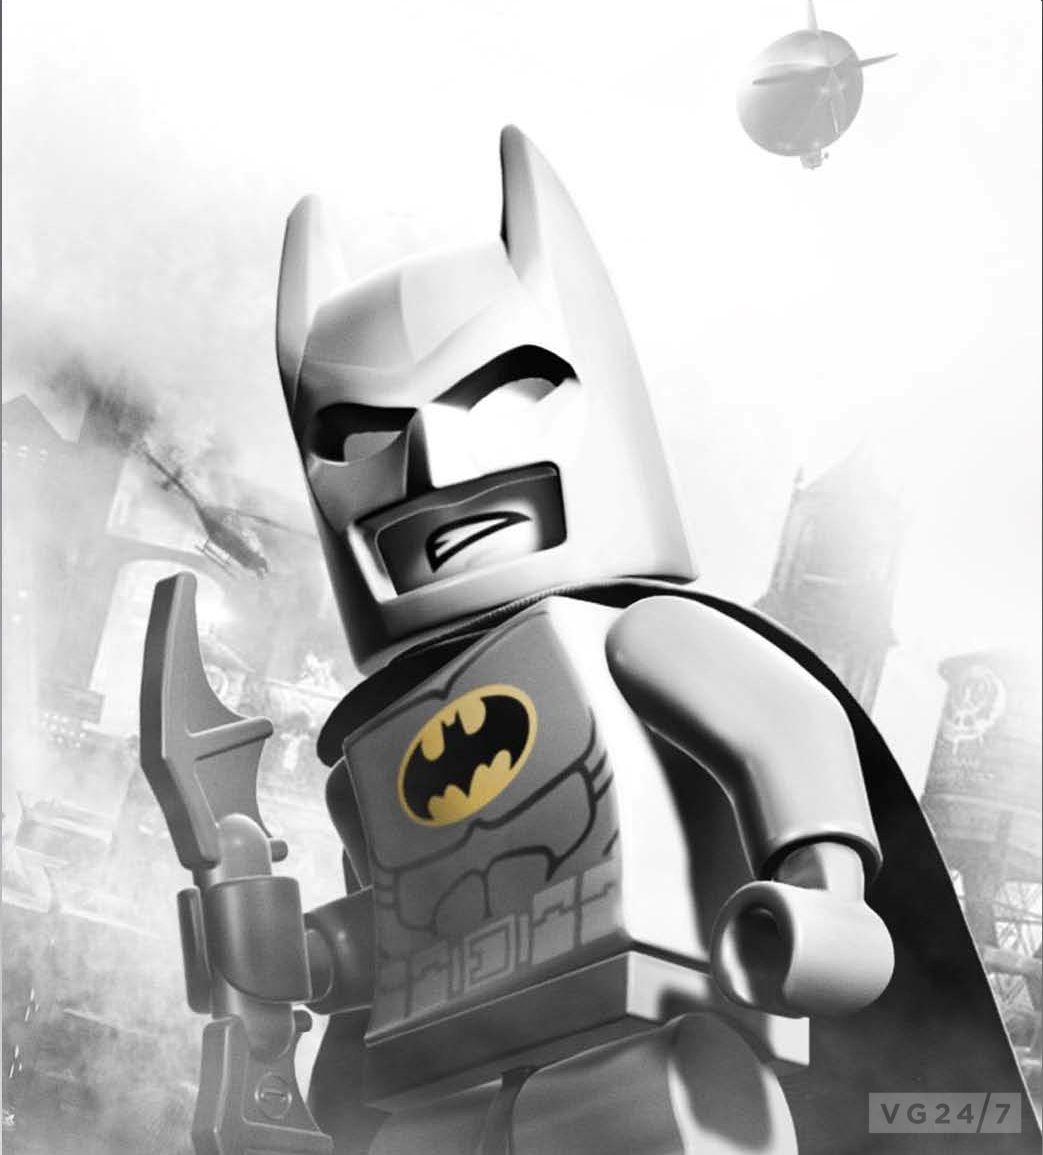 LEGO Batman 2 Spoofs on Batman: Arkham City in New Promo Images